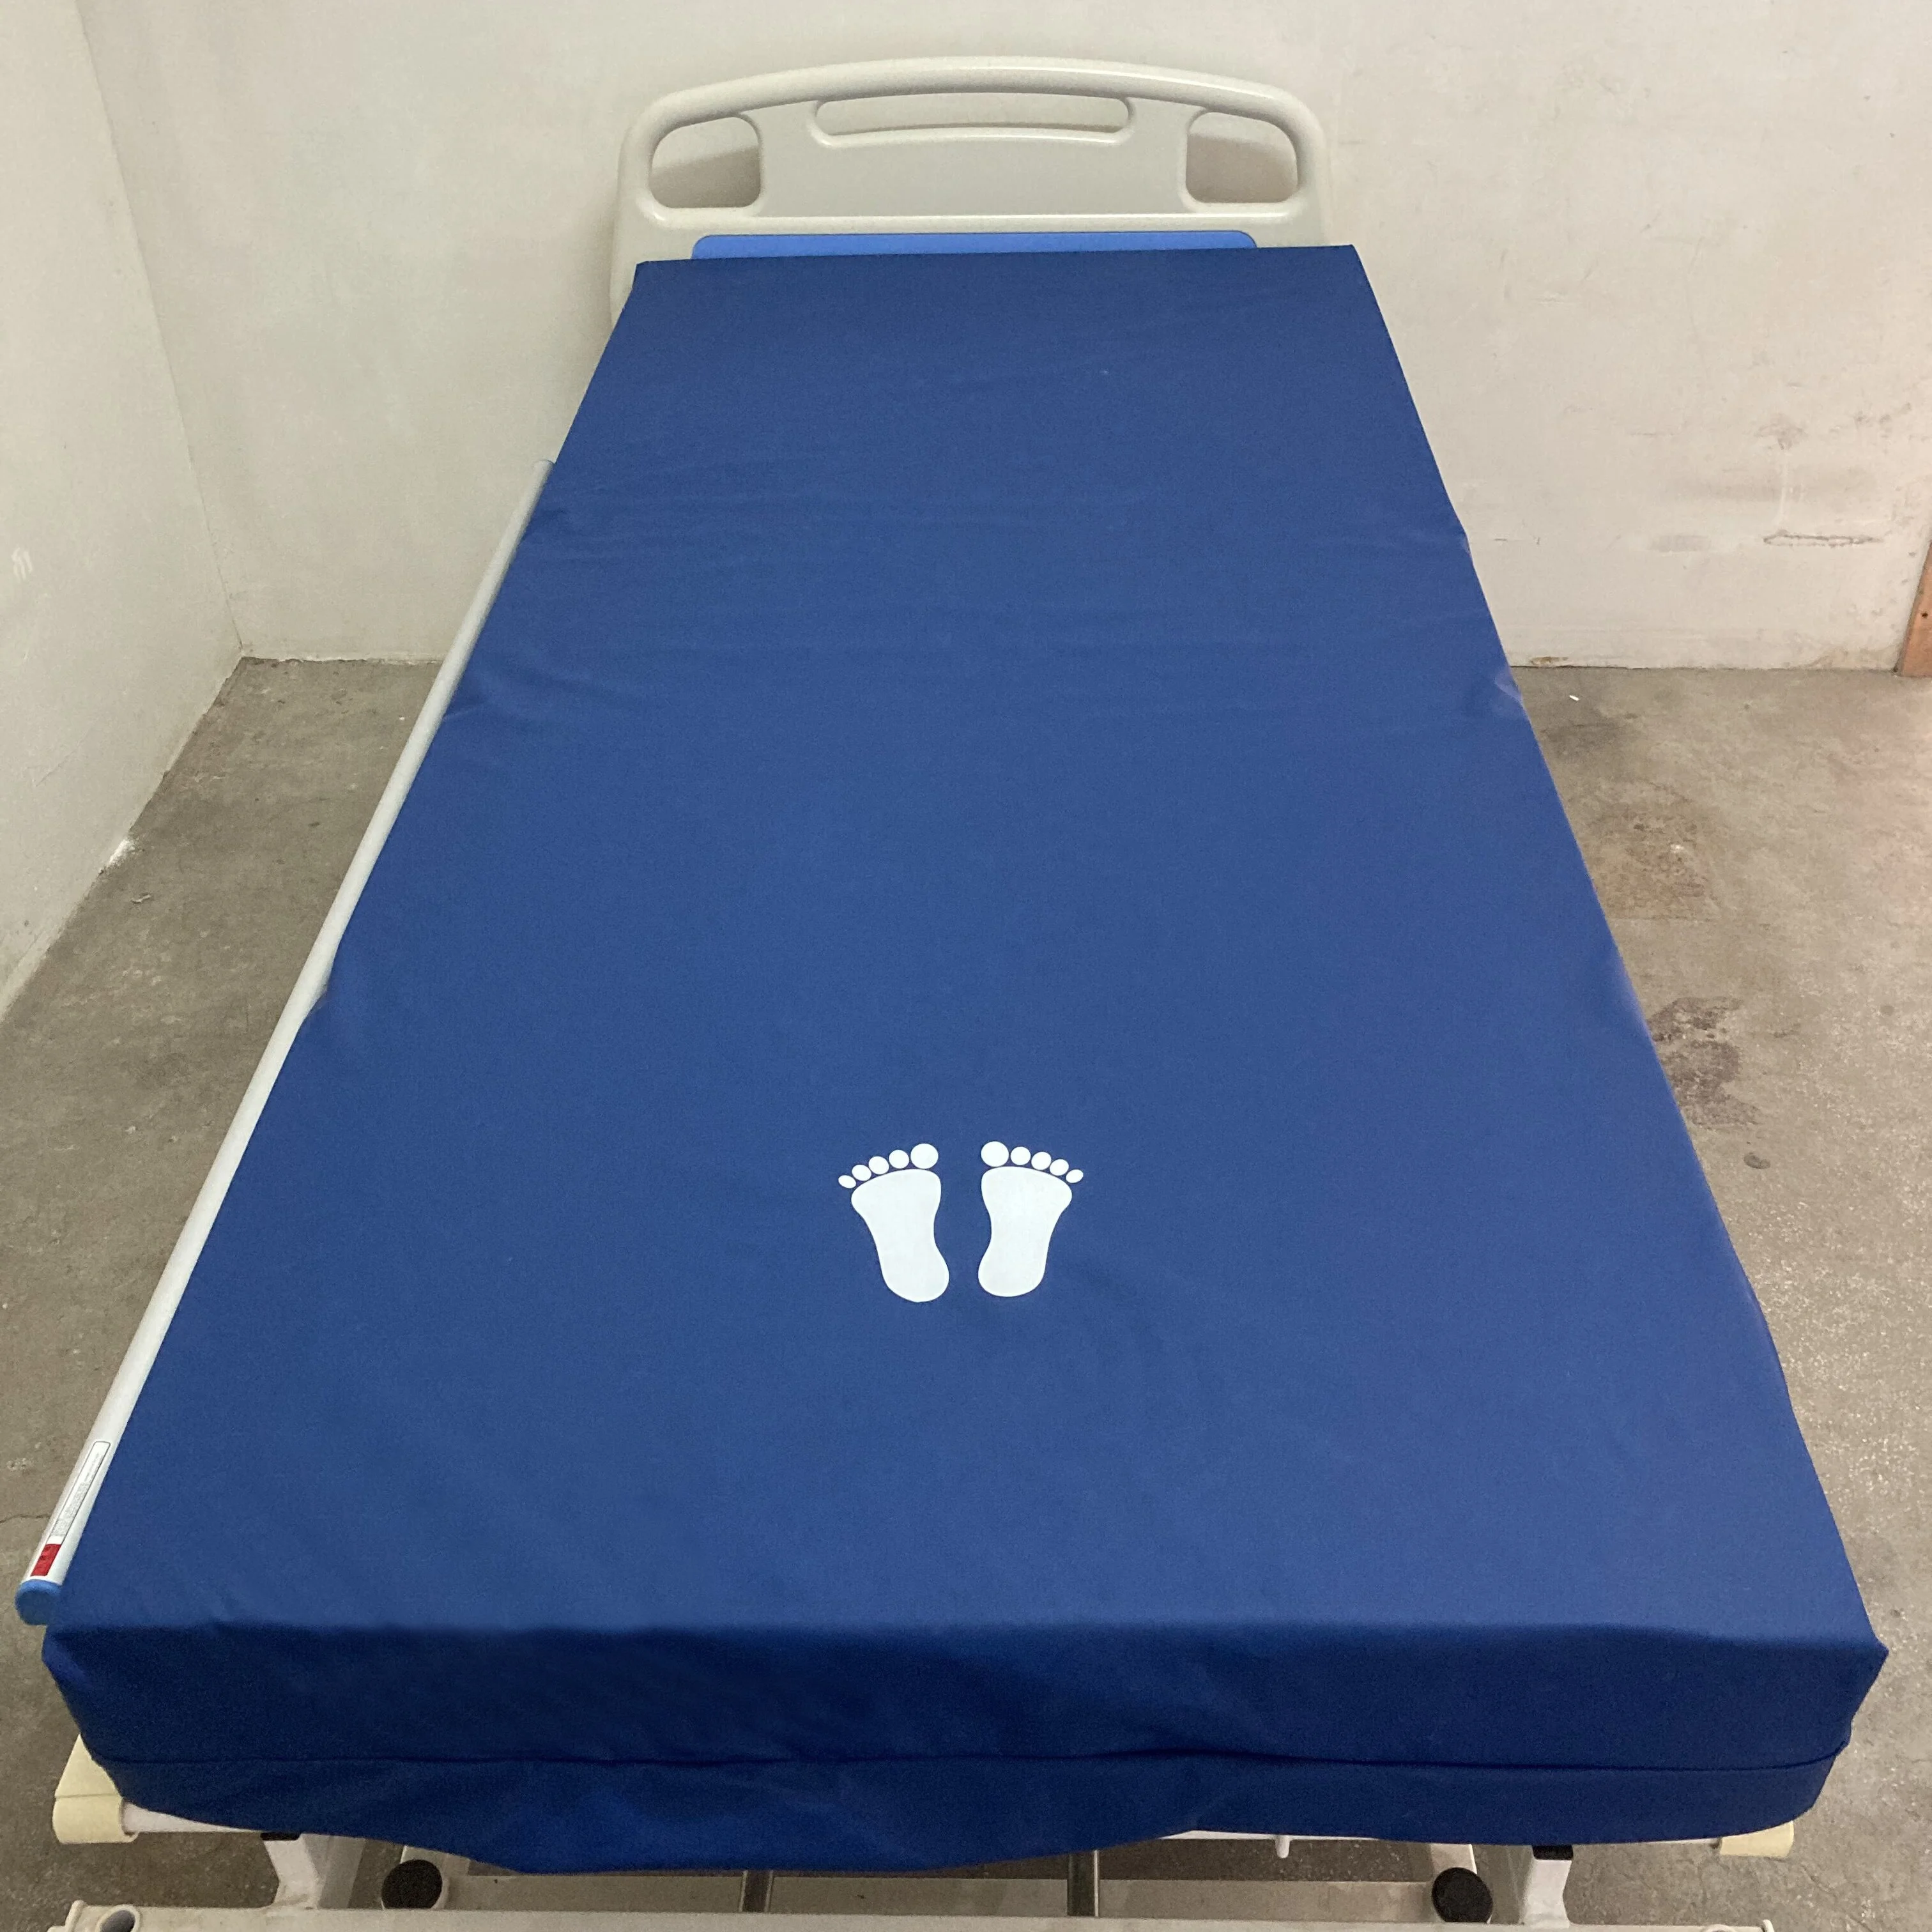 pressure relief Medical foam mattress – ComfortPlus Triple layer king H150, Convoluted